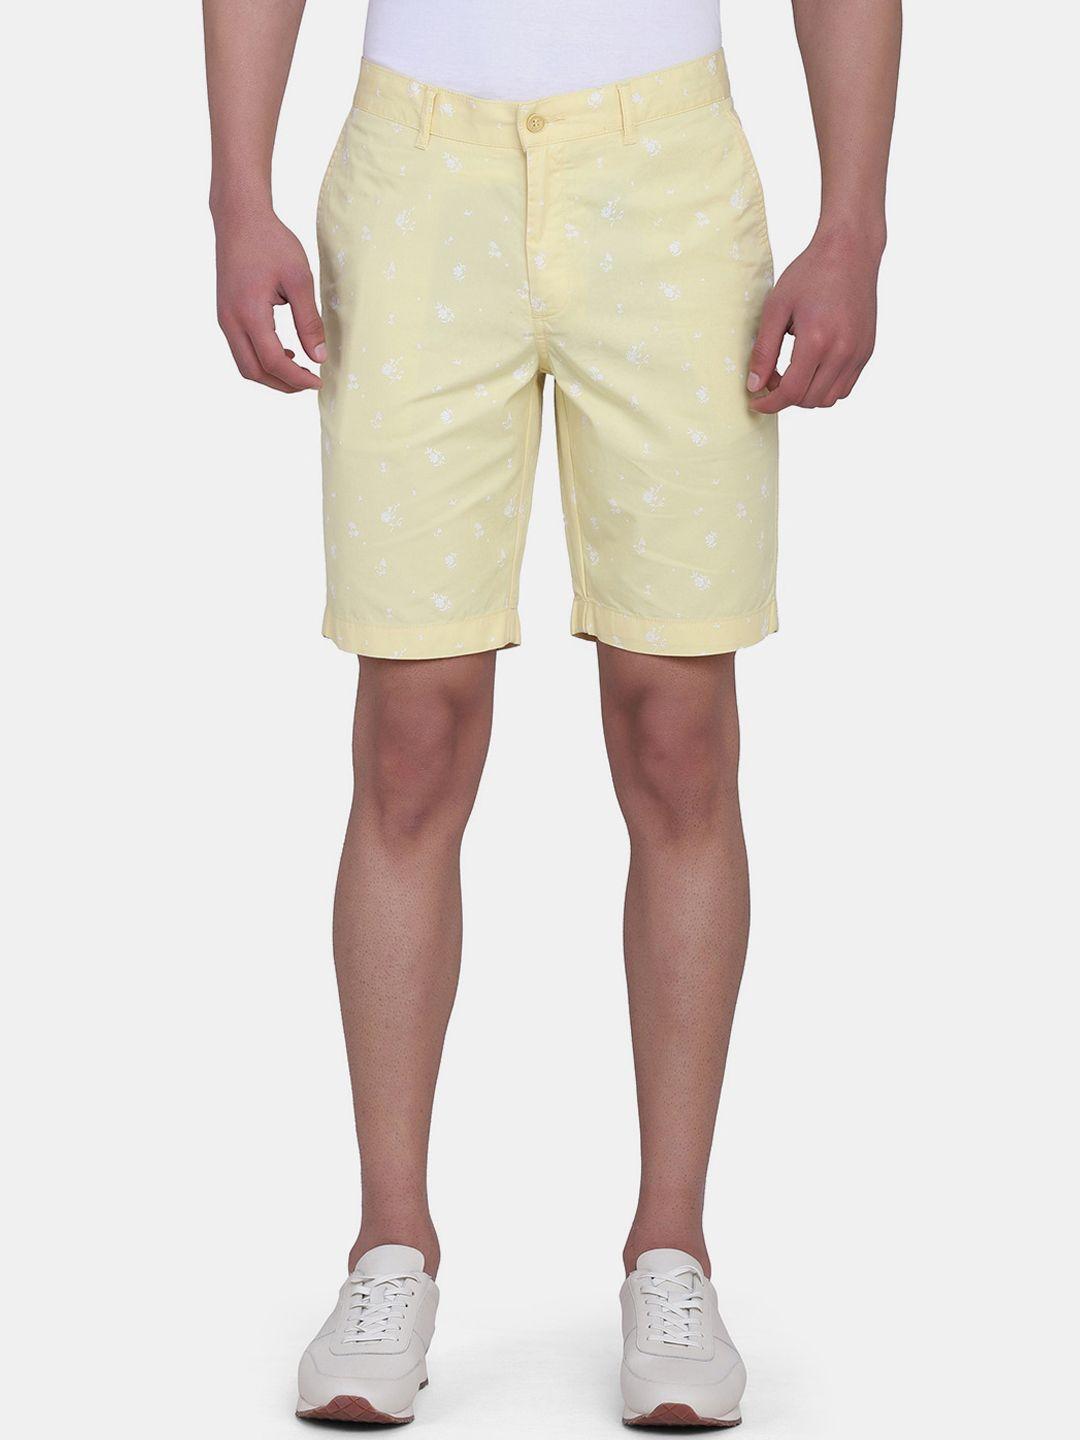 blackberrys-men-yellow-&-white-printed-bs-10-slim-fit-low-rise-shorts